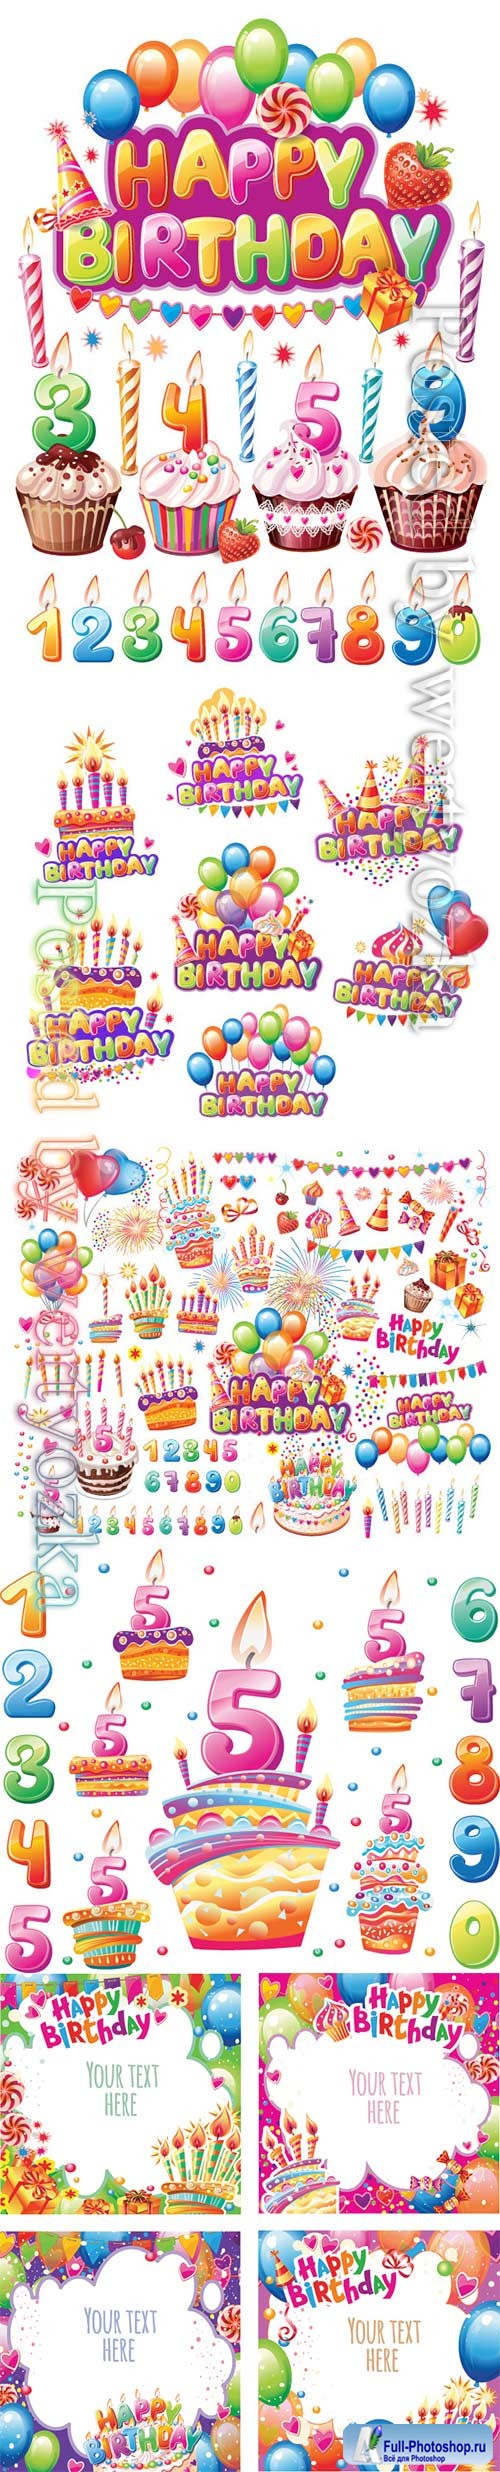 Birthday party set vector elements